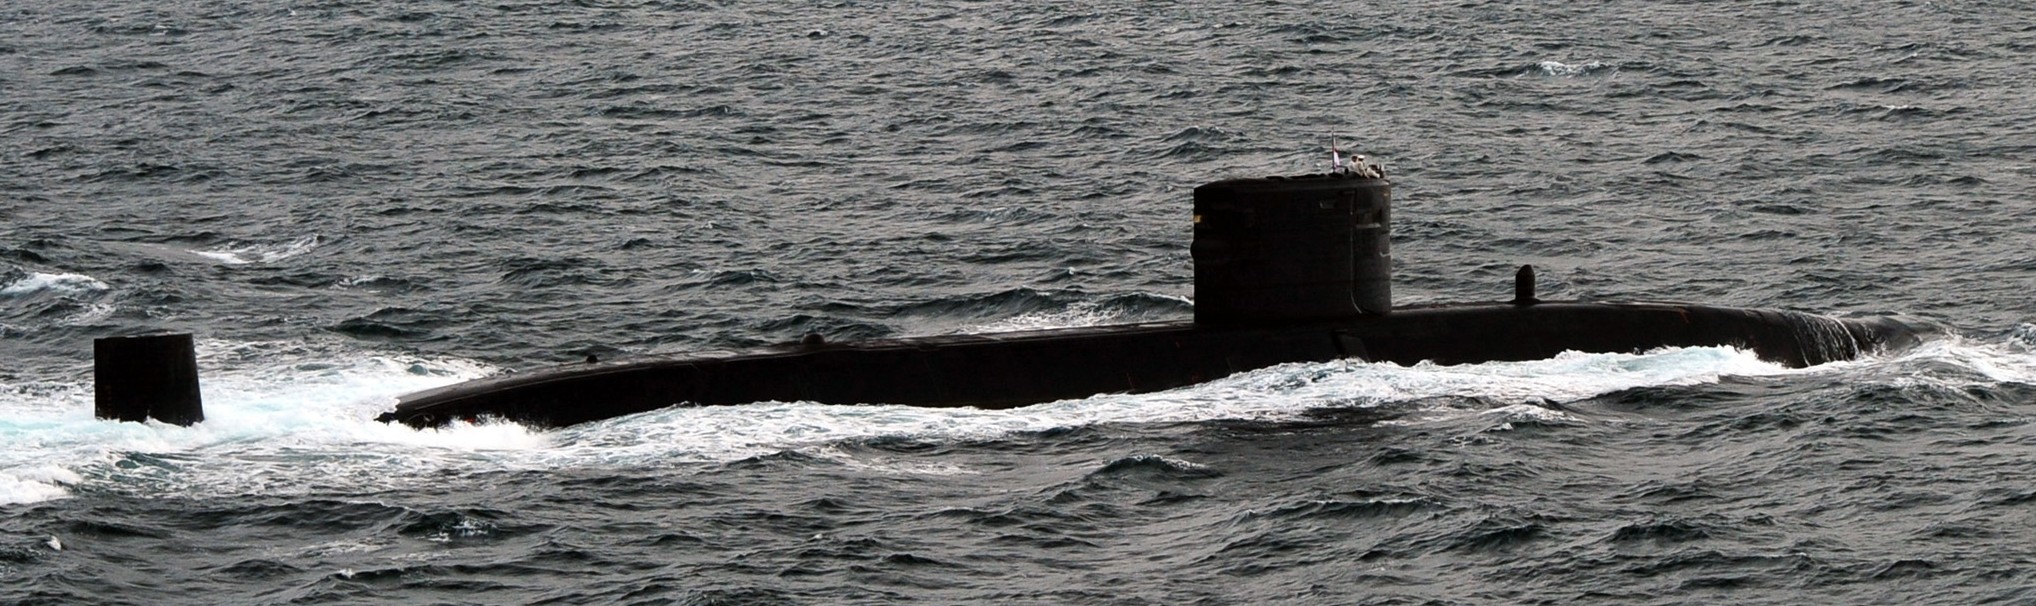 hms torbay s-90 trafalgar class attack submarine royal navy 02